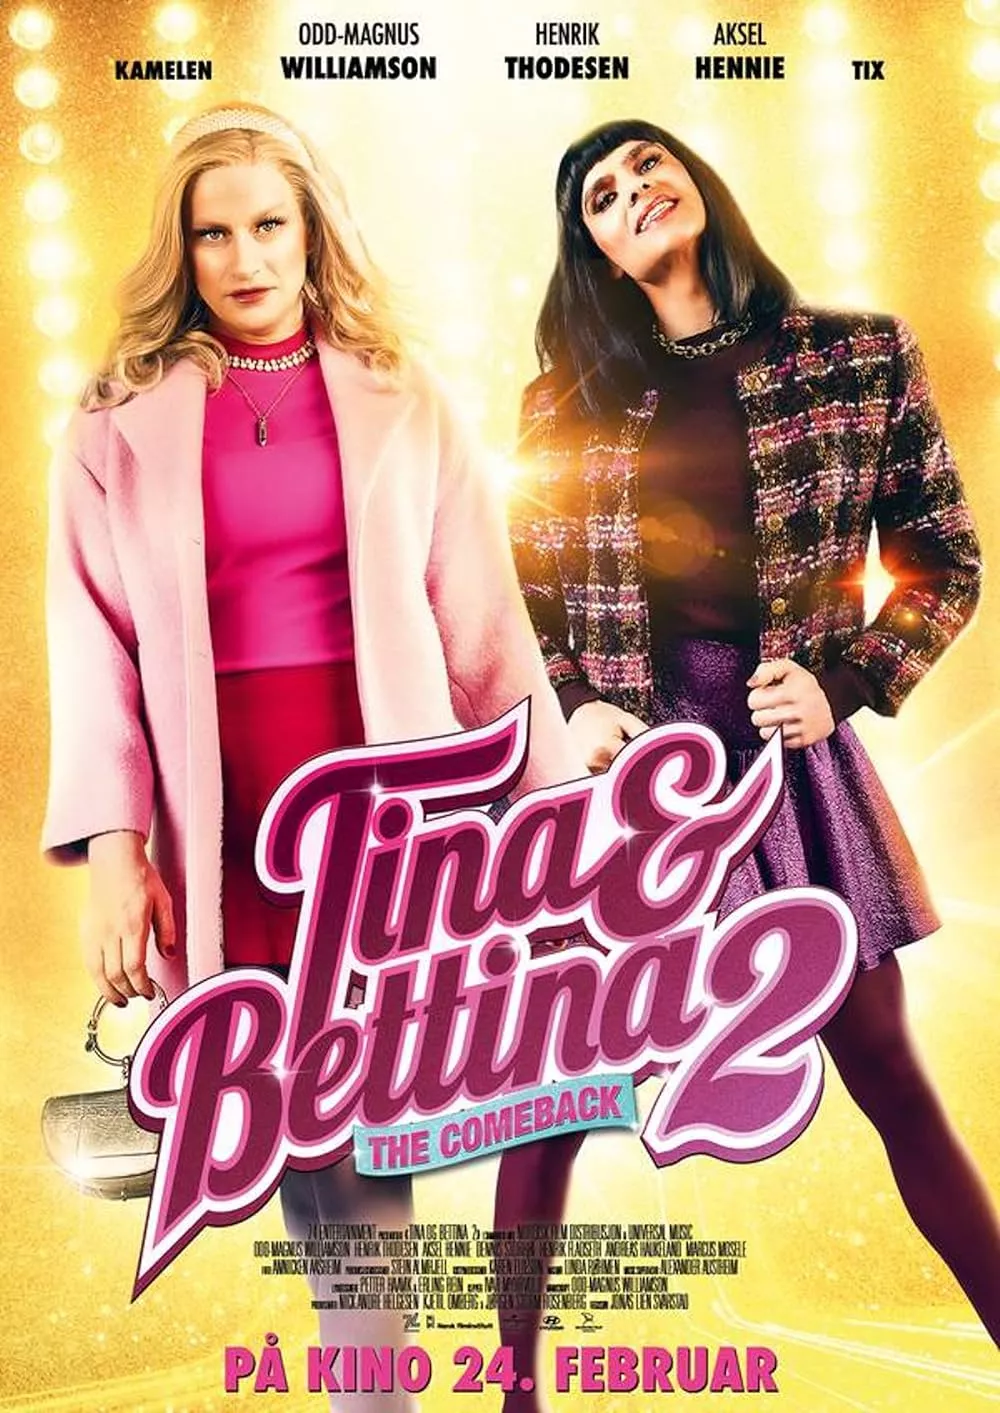 Tina & Bettina 2 | Trailer | På kino 24. februar